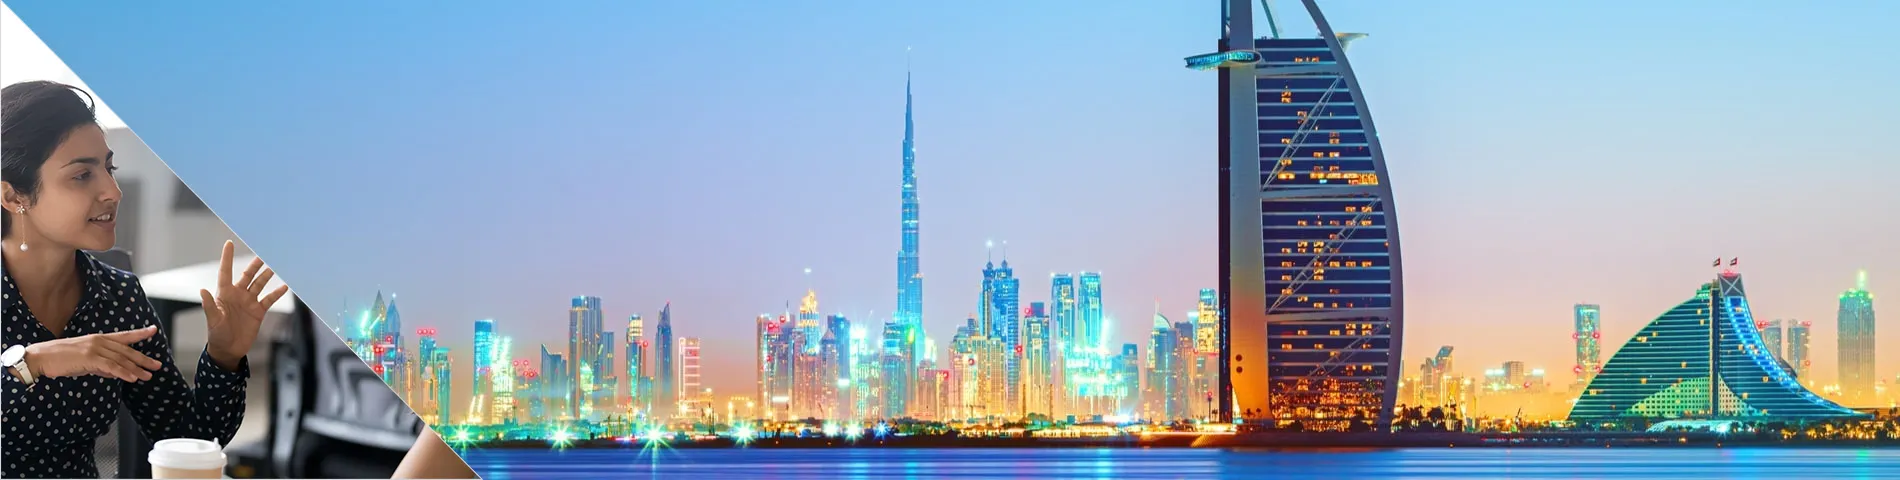 Дубай - Разговорная практика